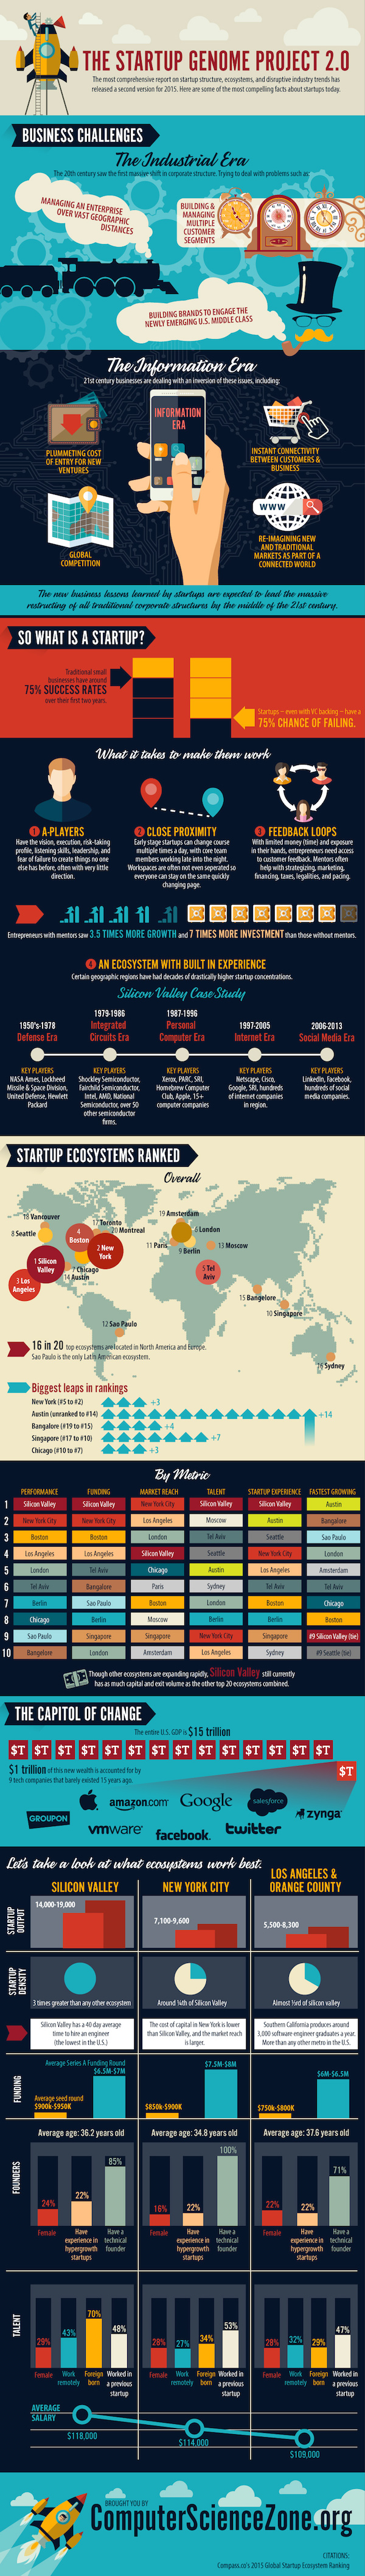 Startup-Genome 2.0 infographic